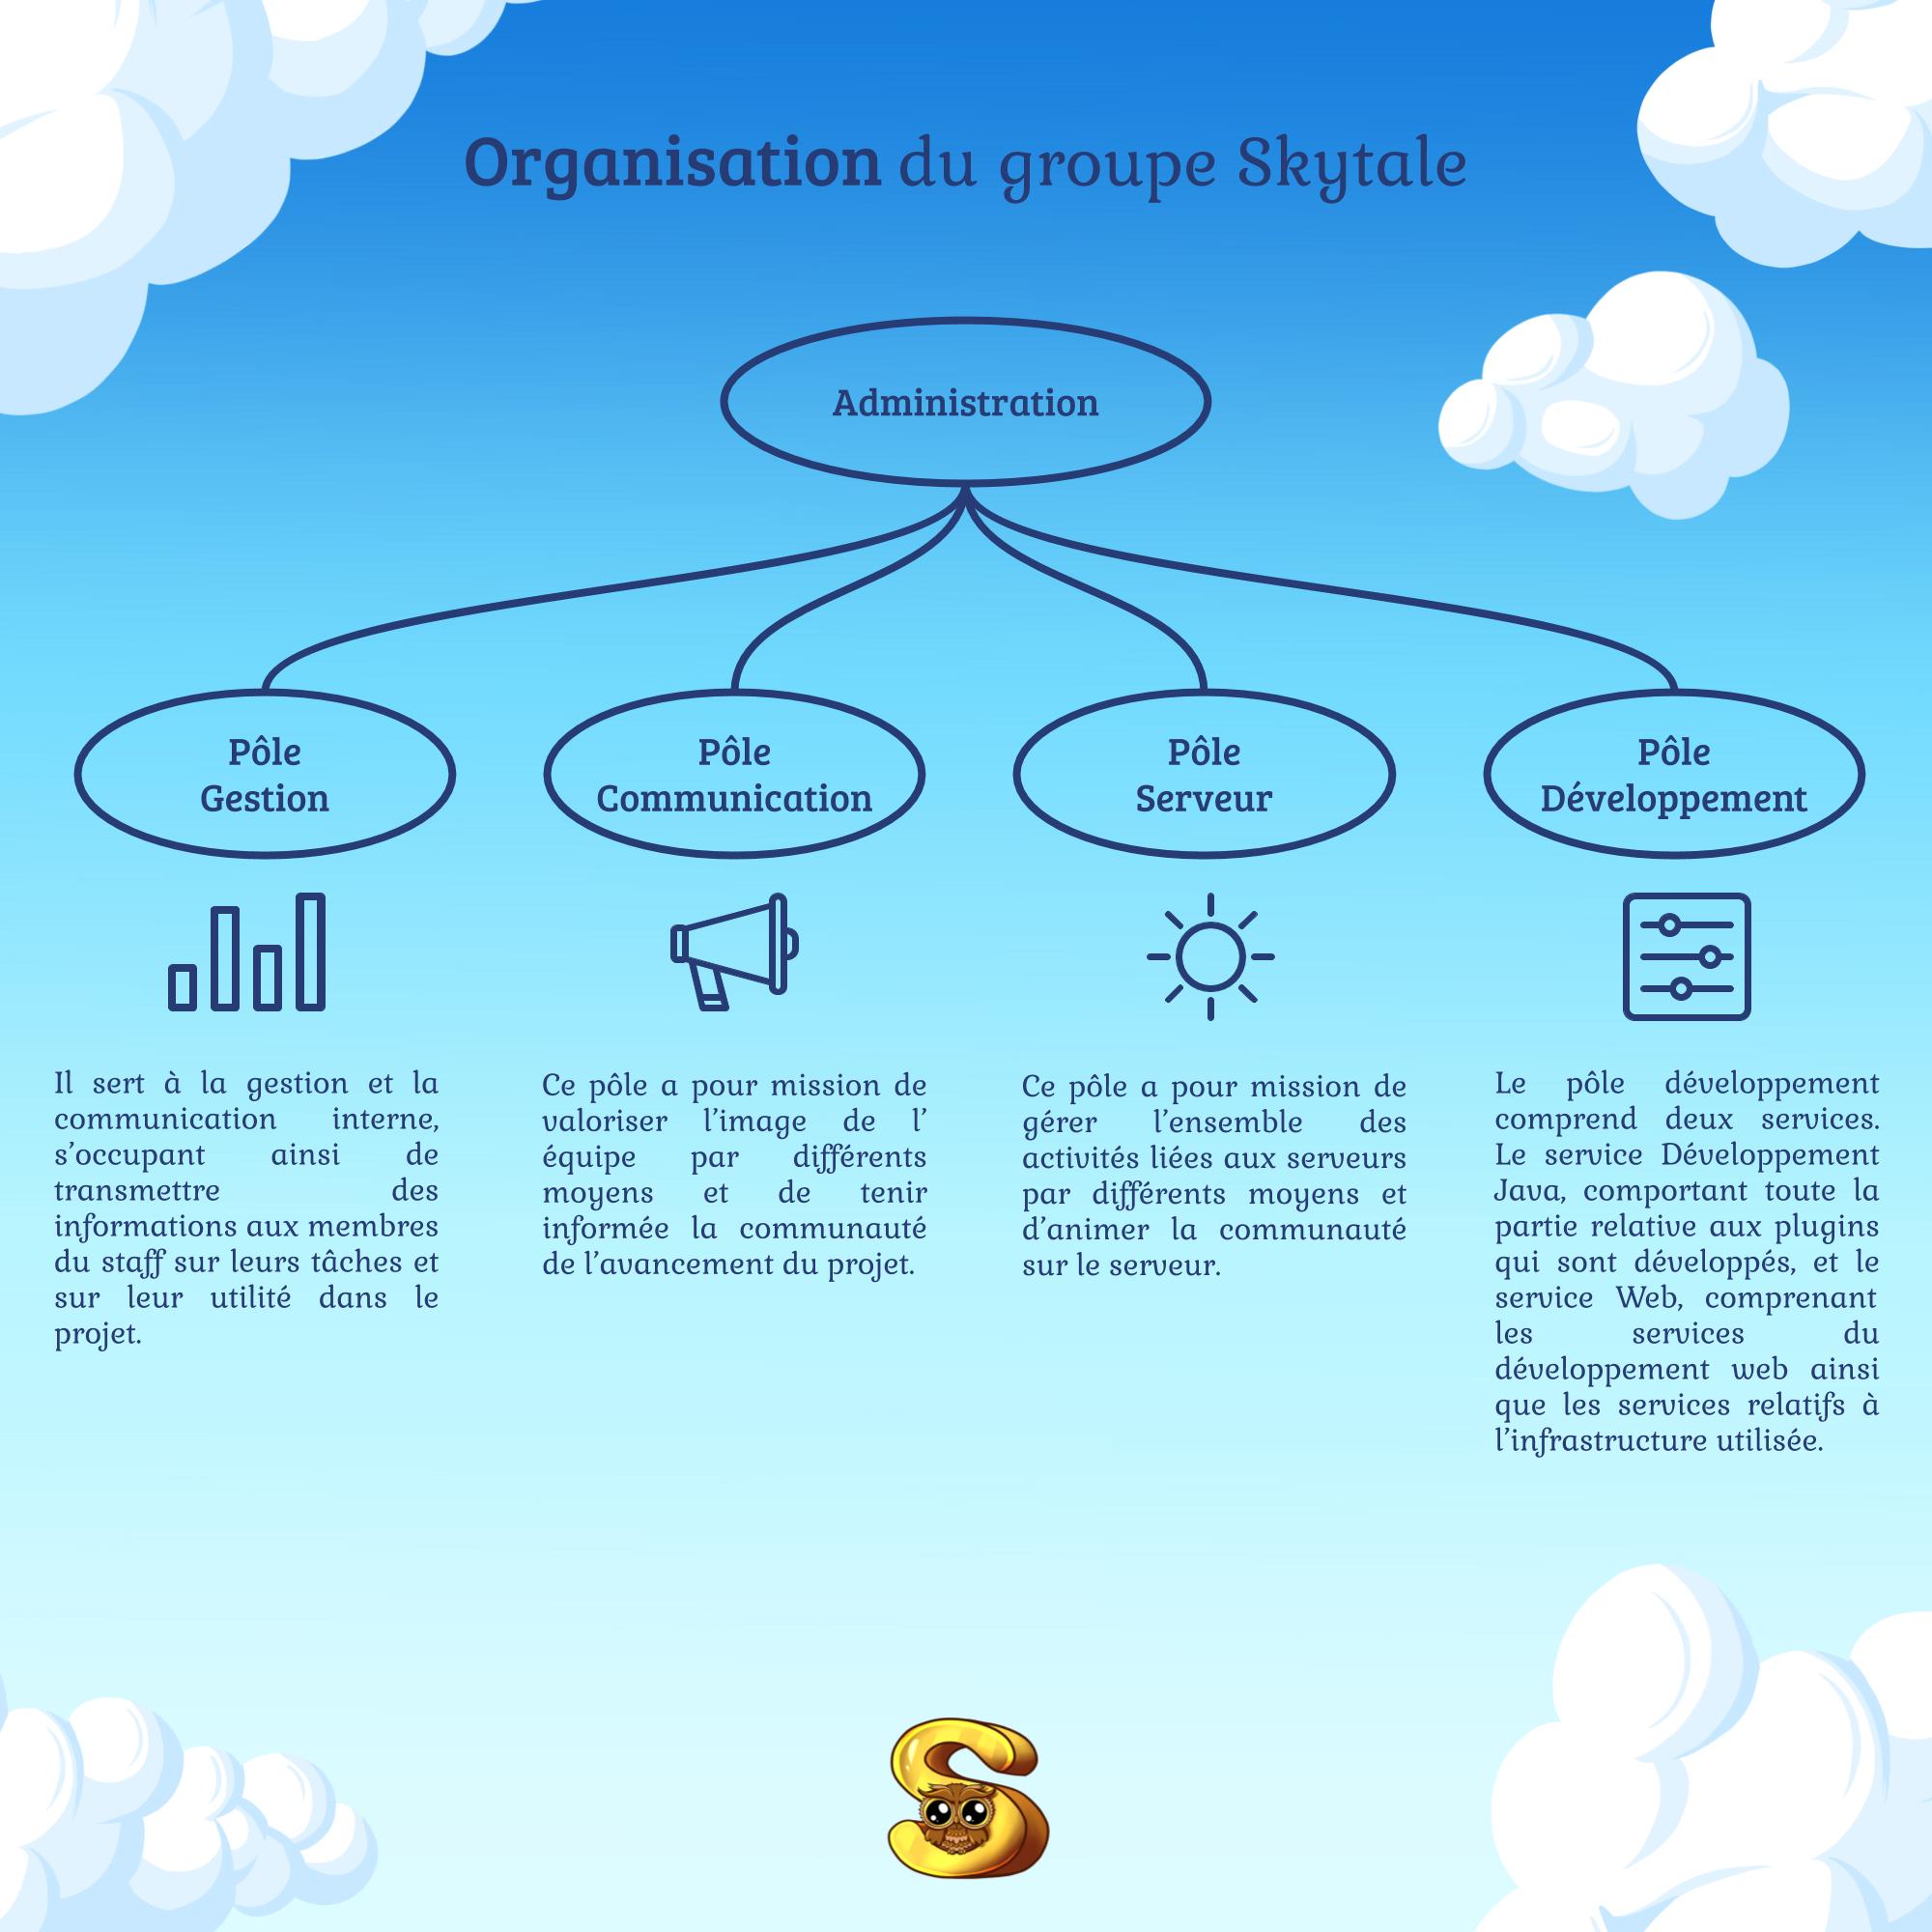 L'organisation du groupe Skytale